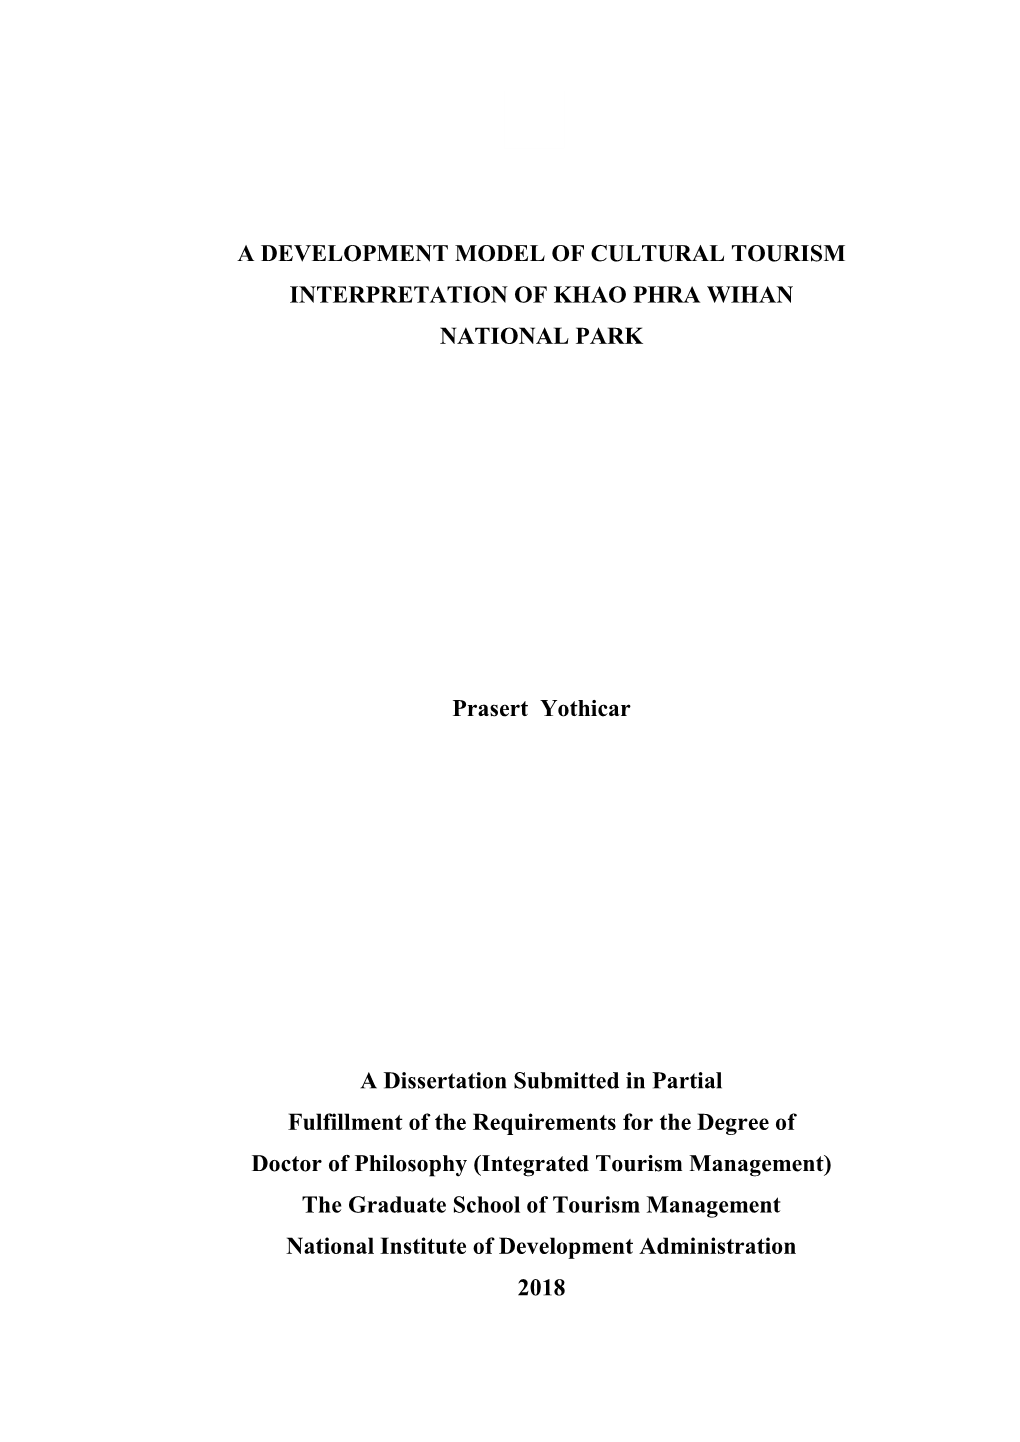 A Development Model of Cultural Tourism Interpretation of Khao Phra Wihan National Park